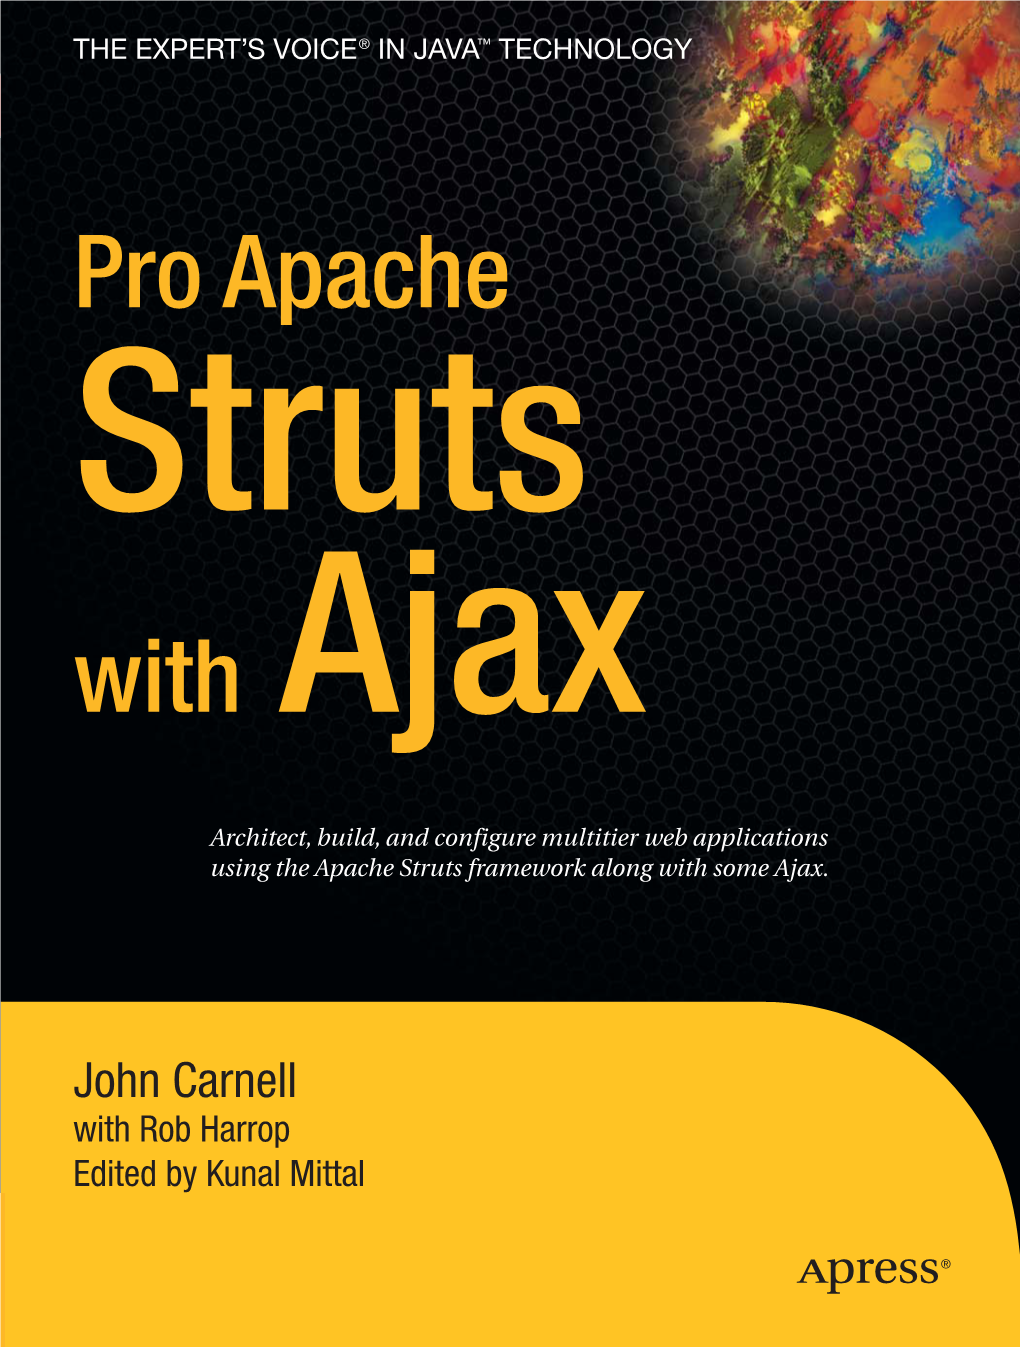 Pro Apache with Ajax